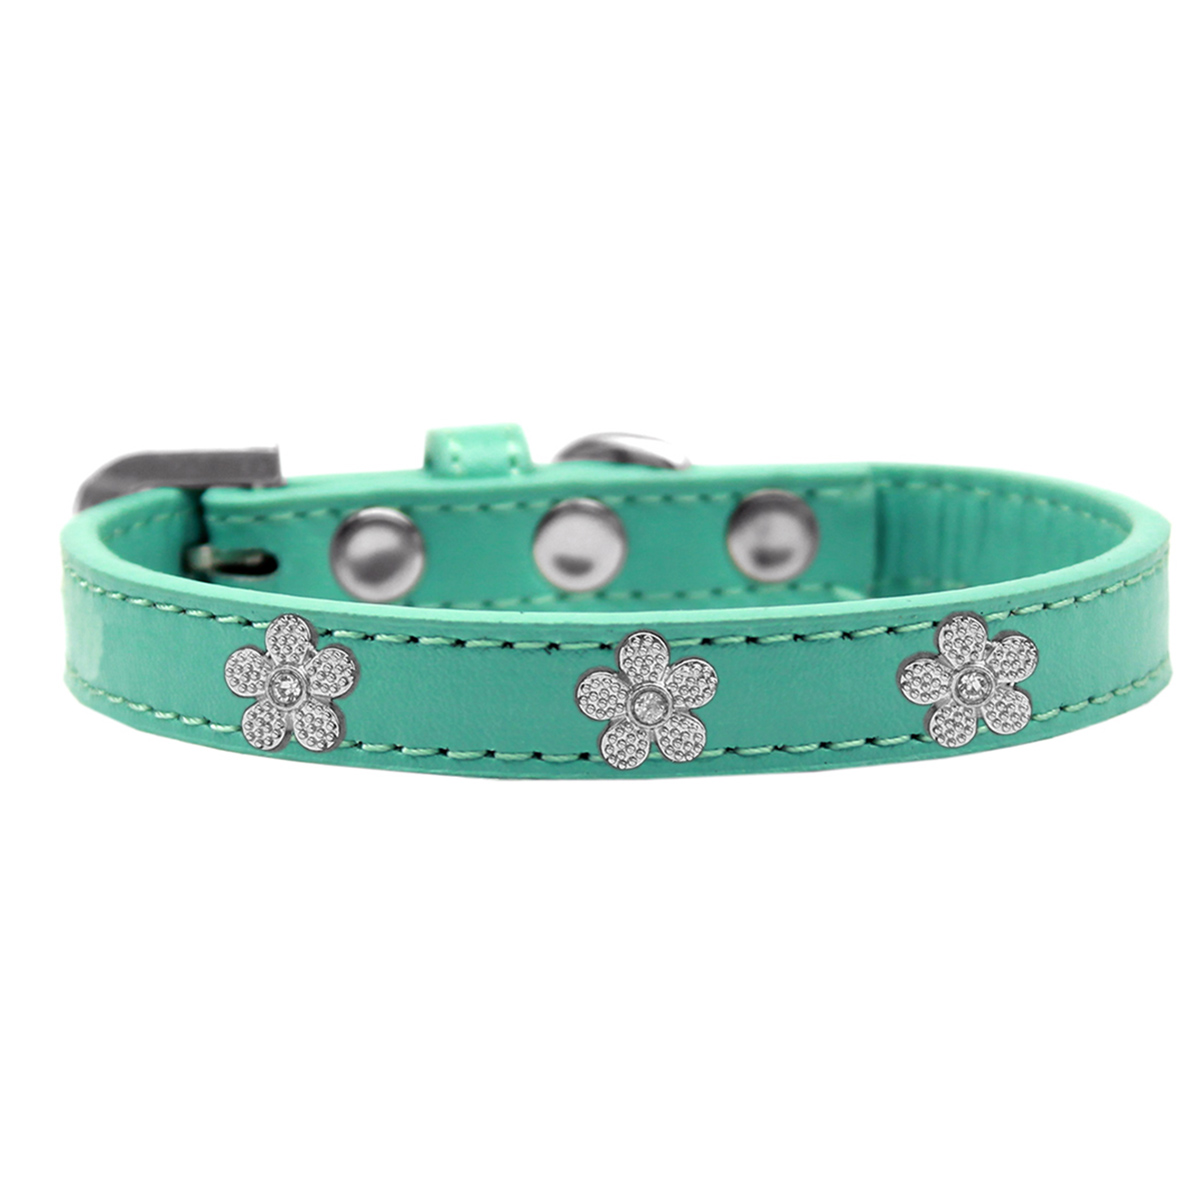 Silver Flower Widget Dog Collar, Aqua - Size 16